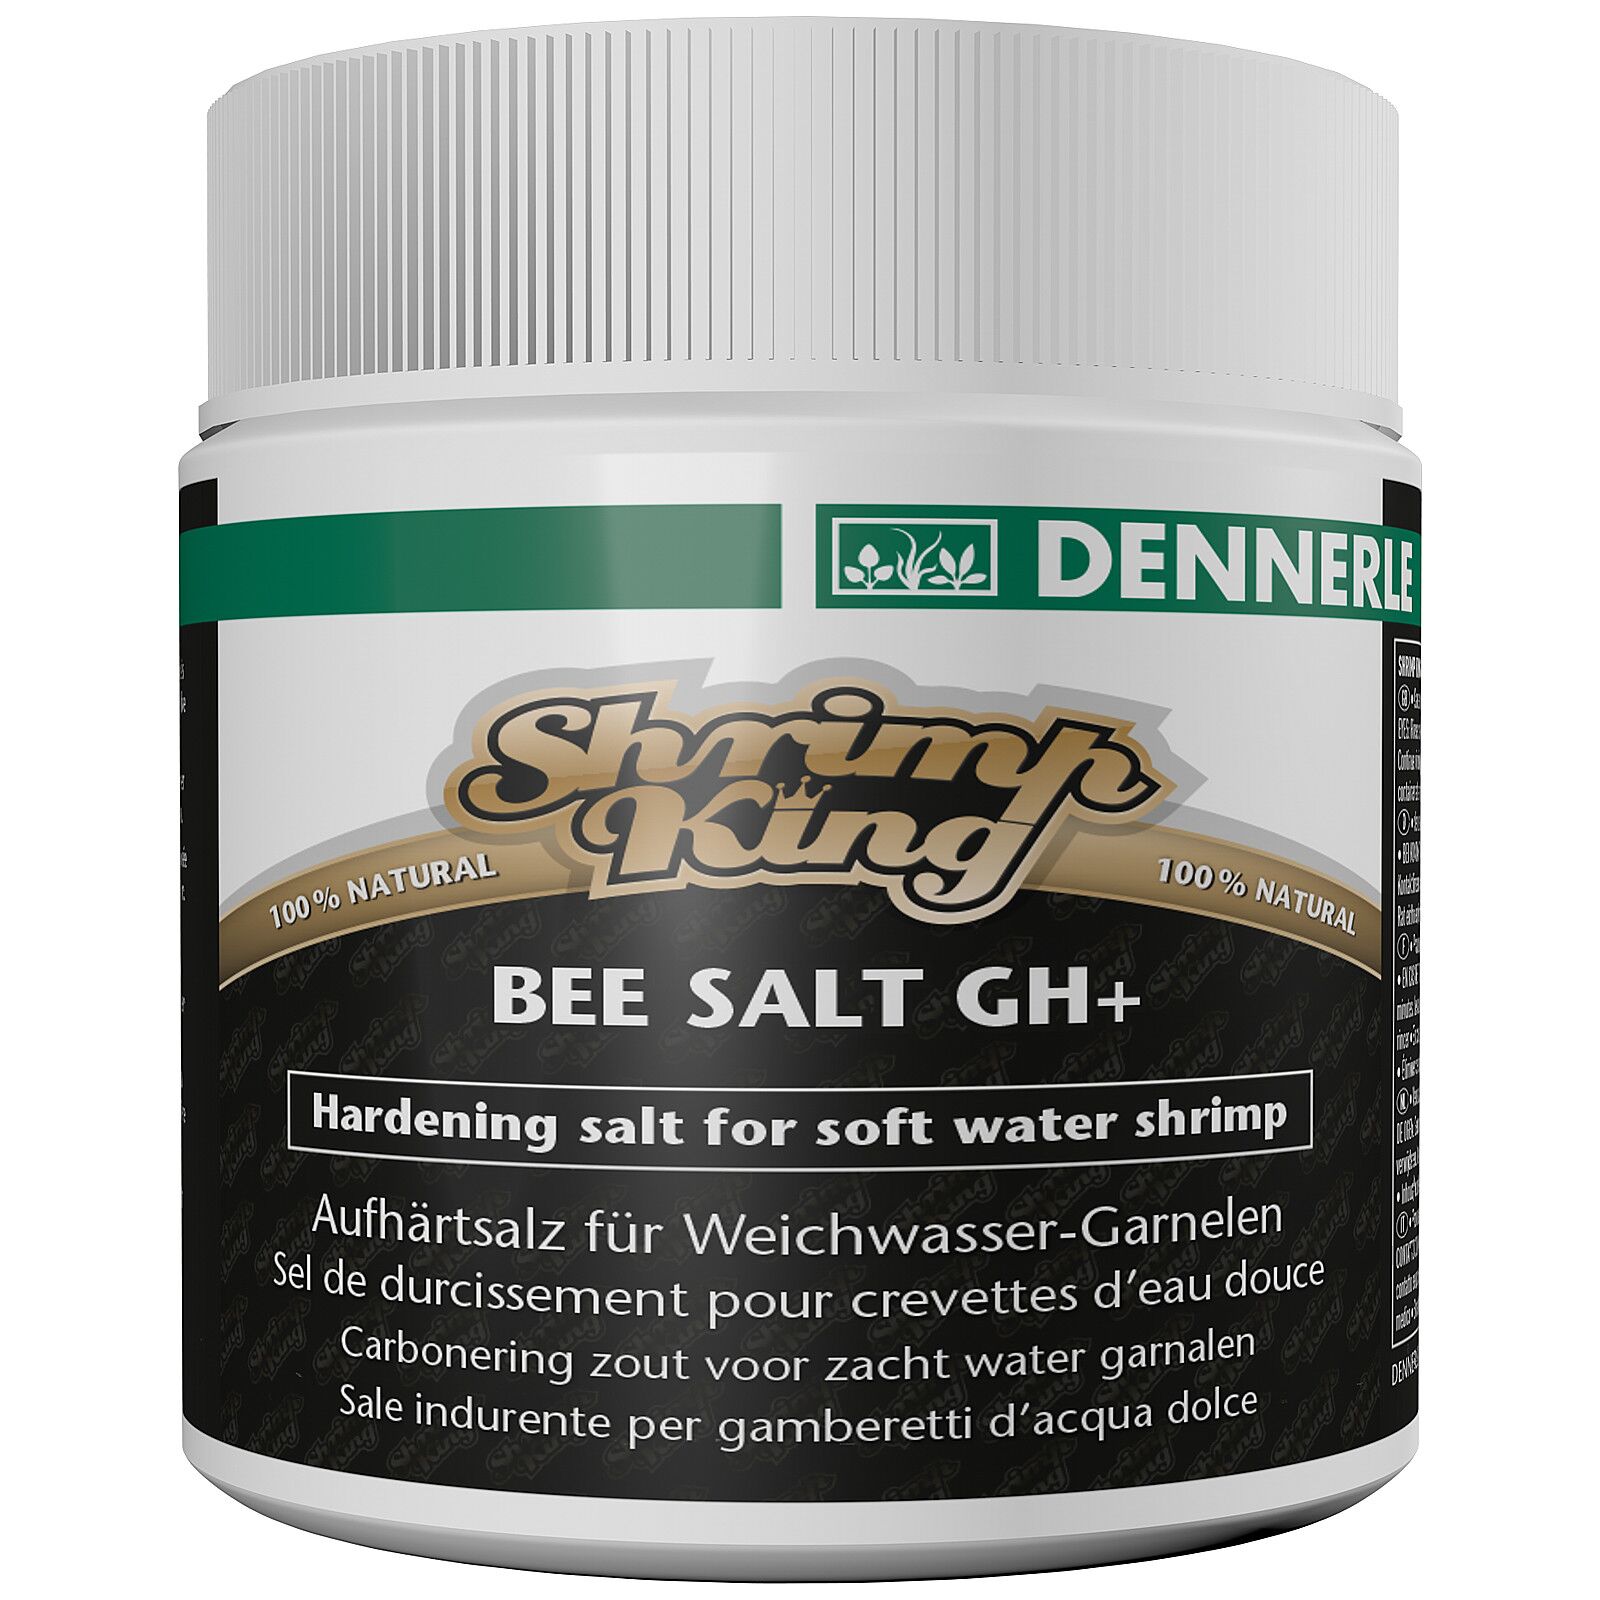 Dennerle - Shrimp King - Bee Salt GH+